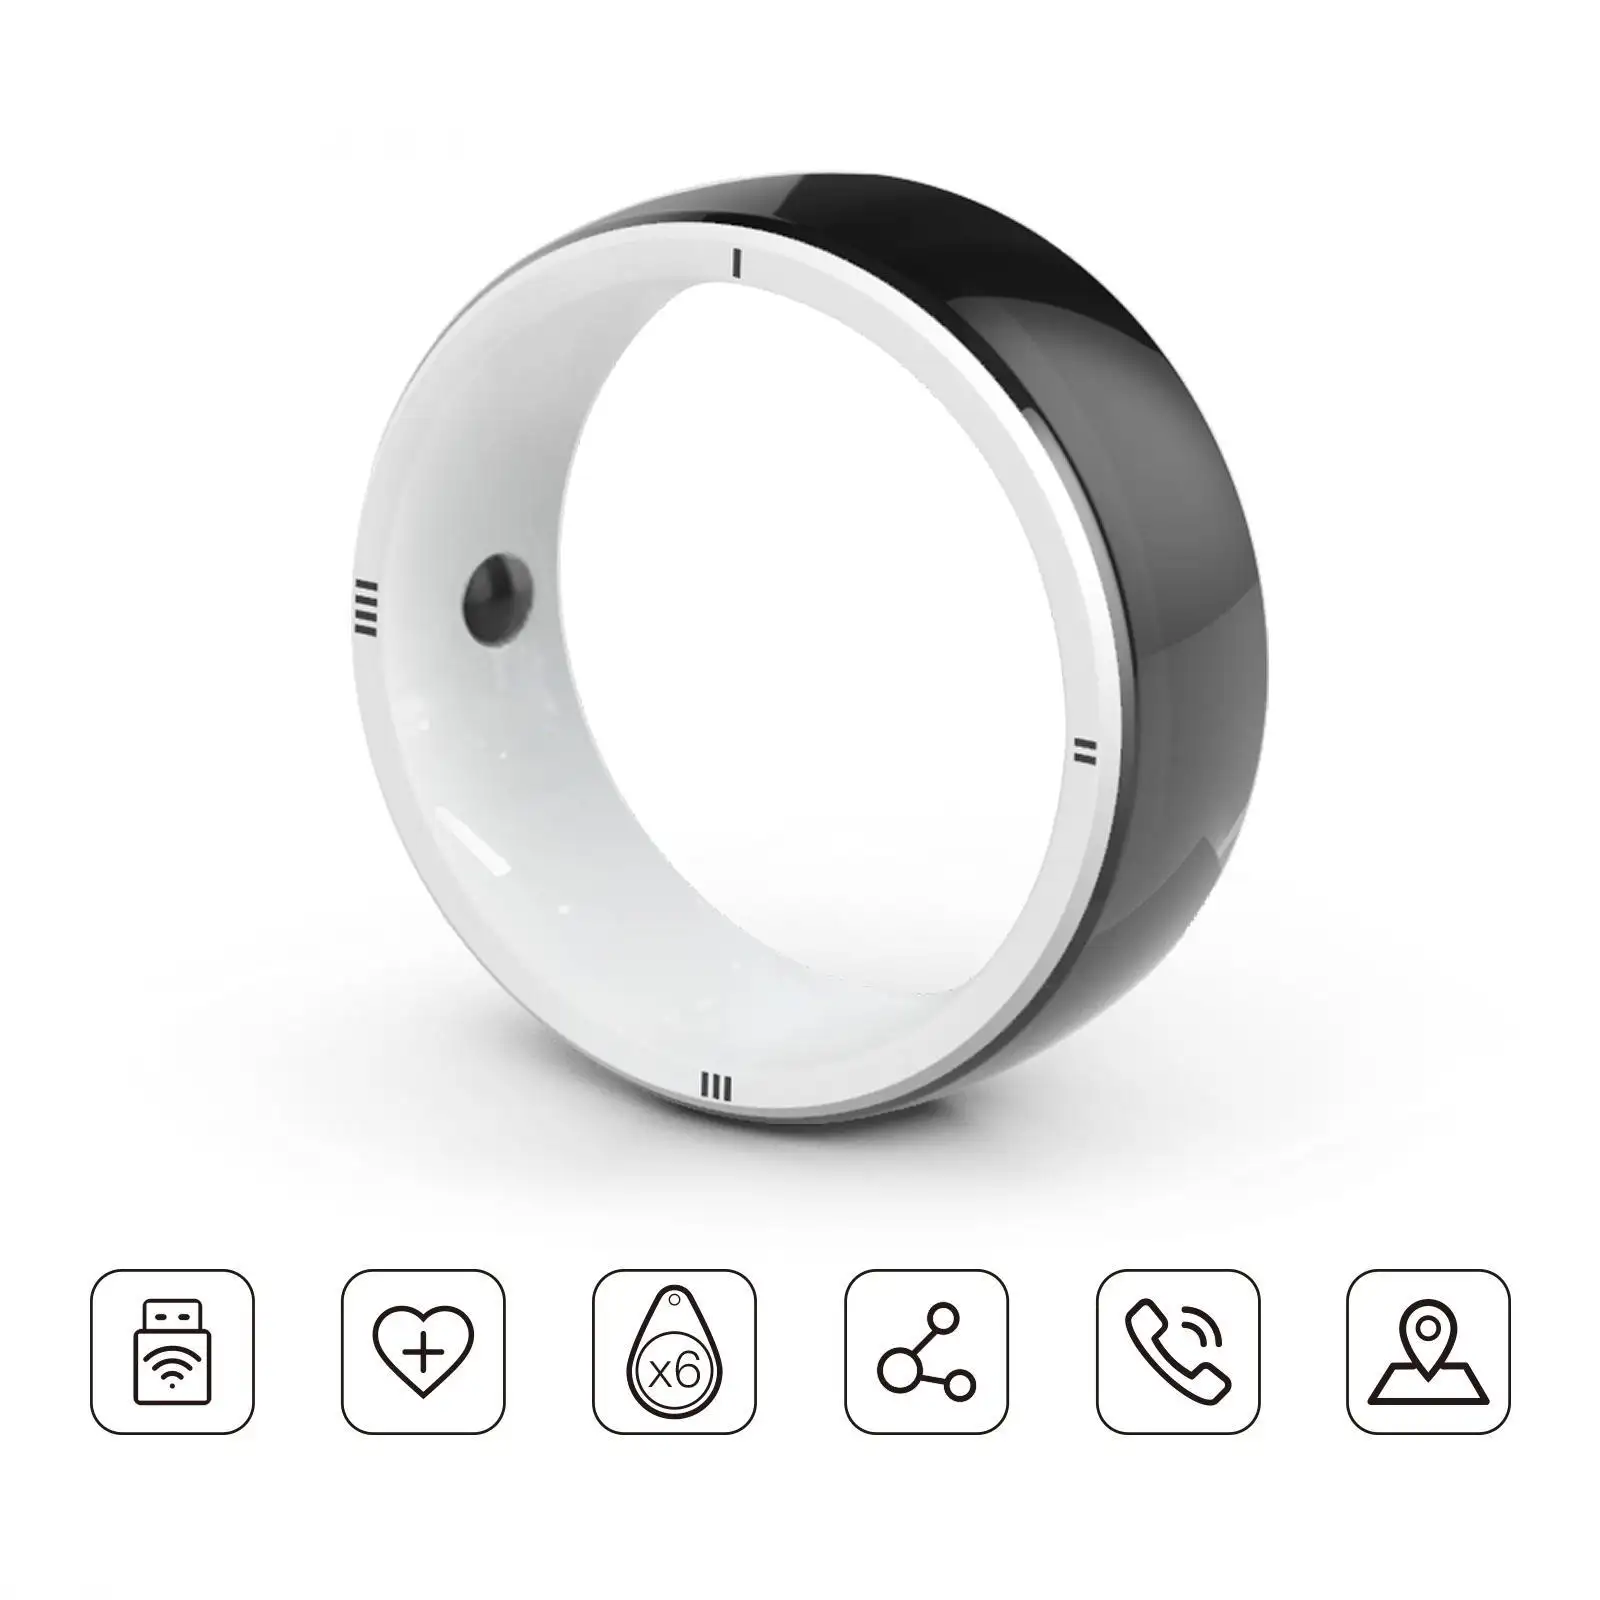 JAKCOM R5 Smart Ring New Smart Ring Super Wert als 20 Meter Erweiterung blei citycoco x10 benjie mini clip mp3 player handbuch